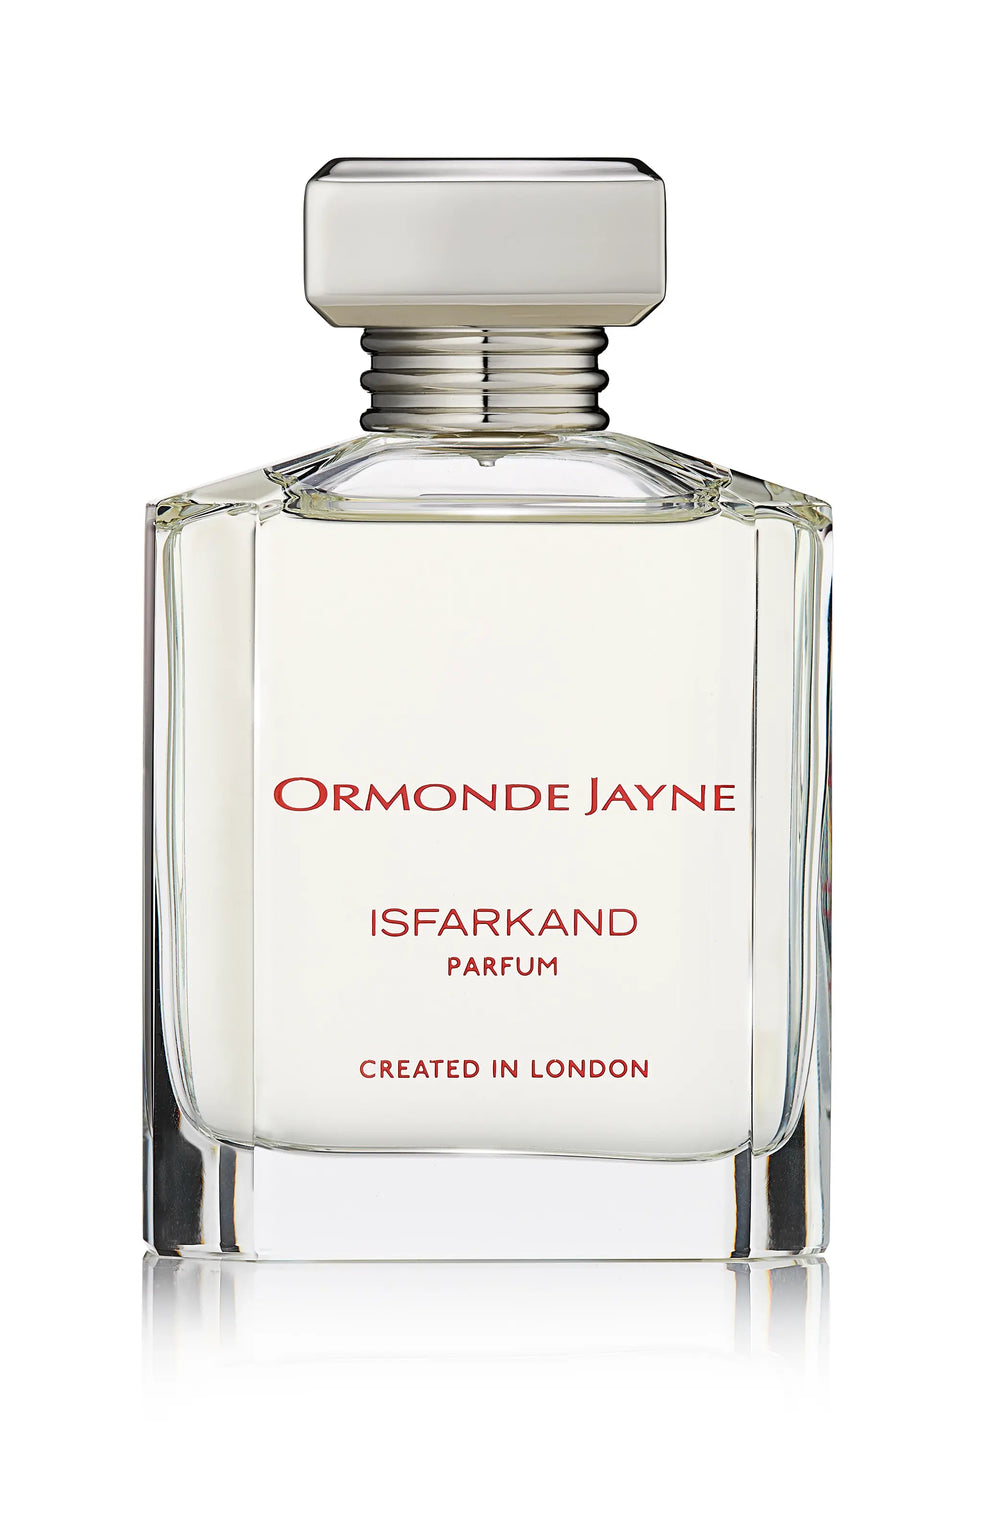 Isfarkand – Ormonde Jayne London